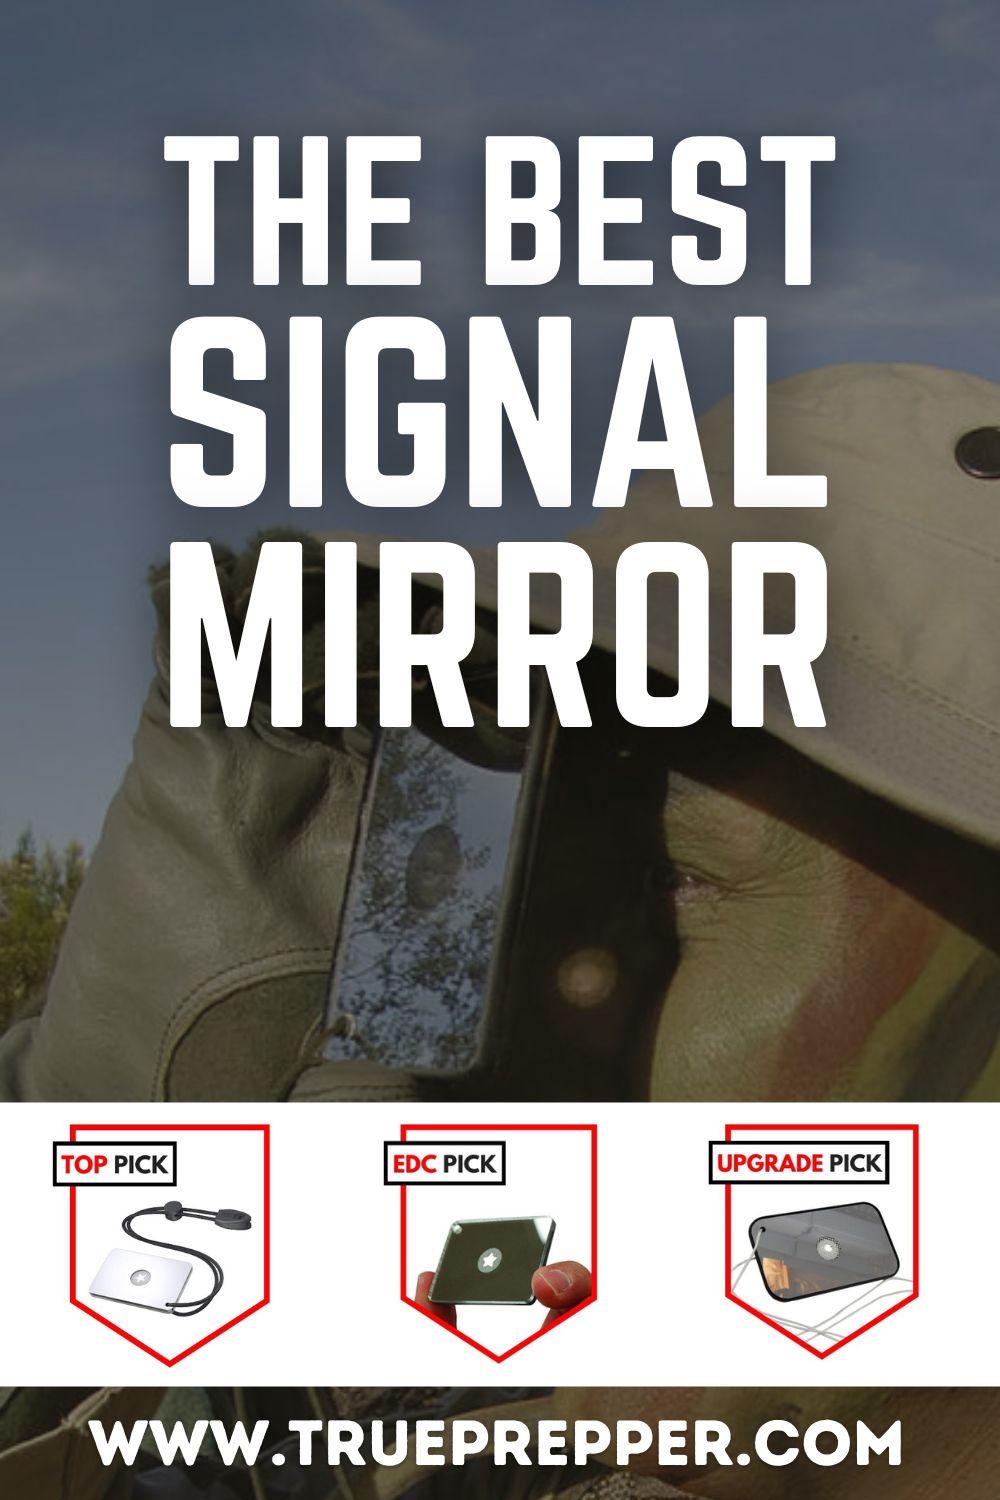 The Best Signal Mirror